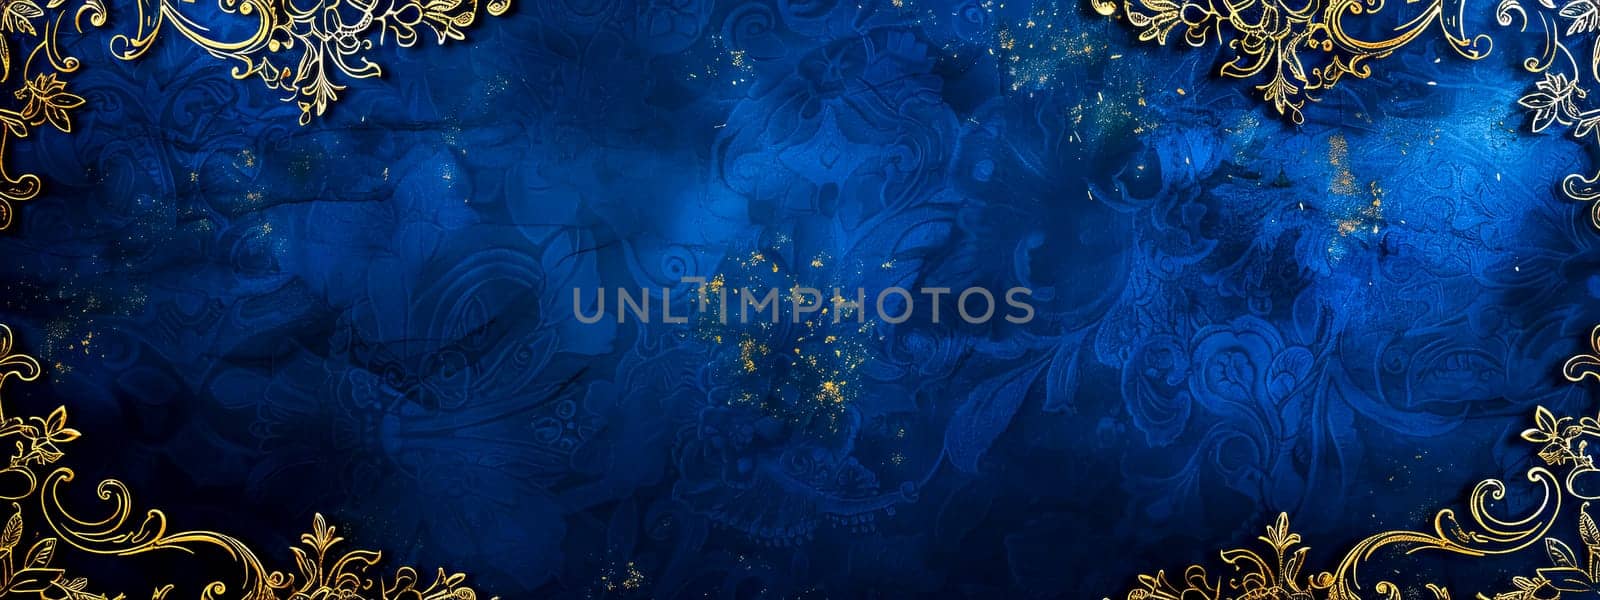 Elegant blue and gold floral background design by Edophoto